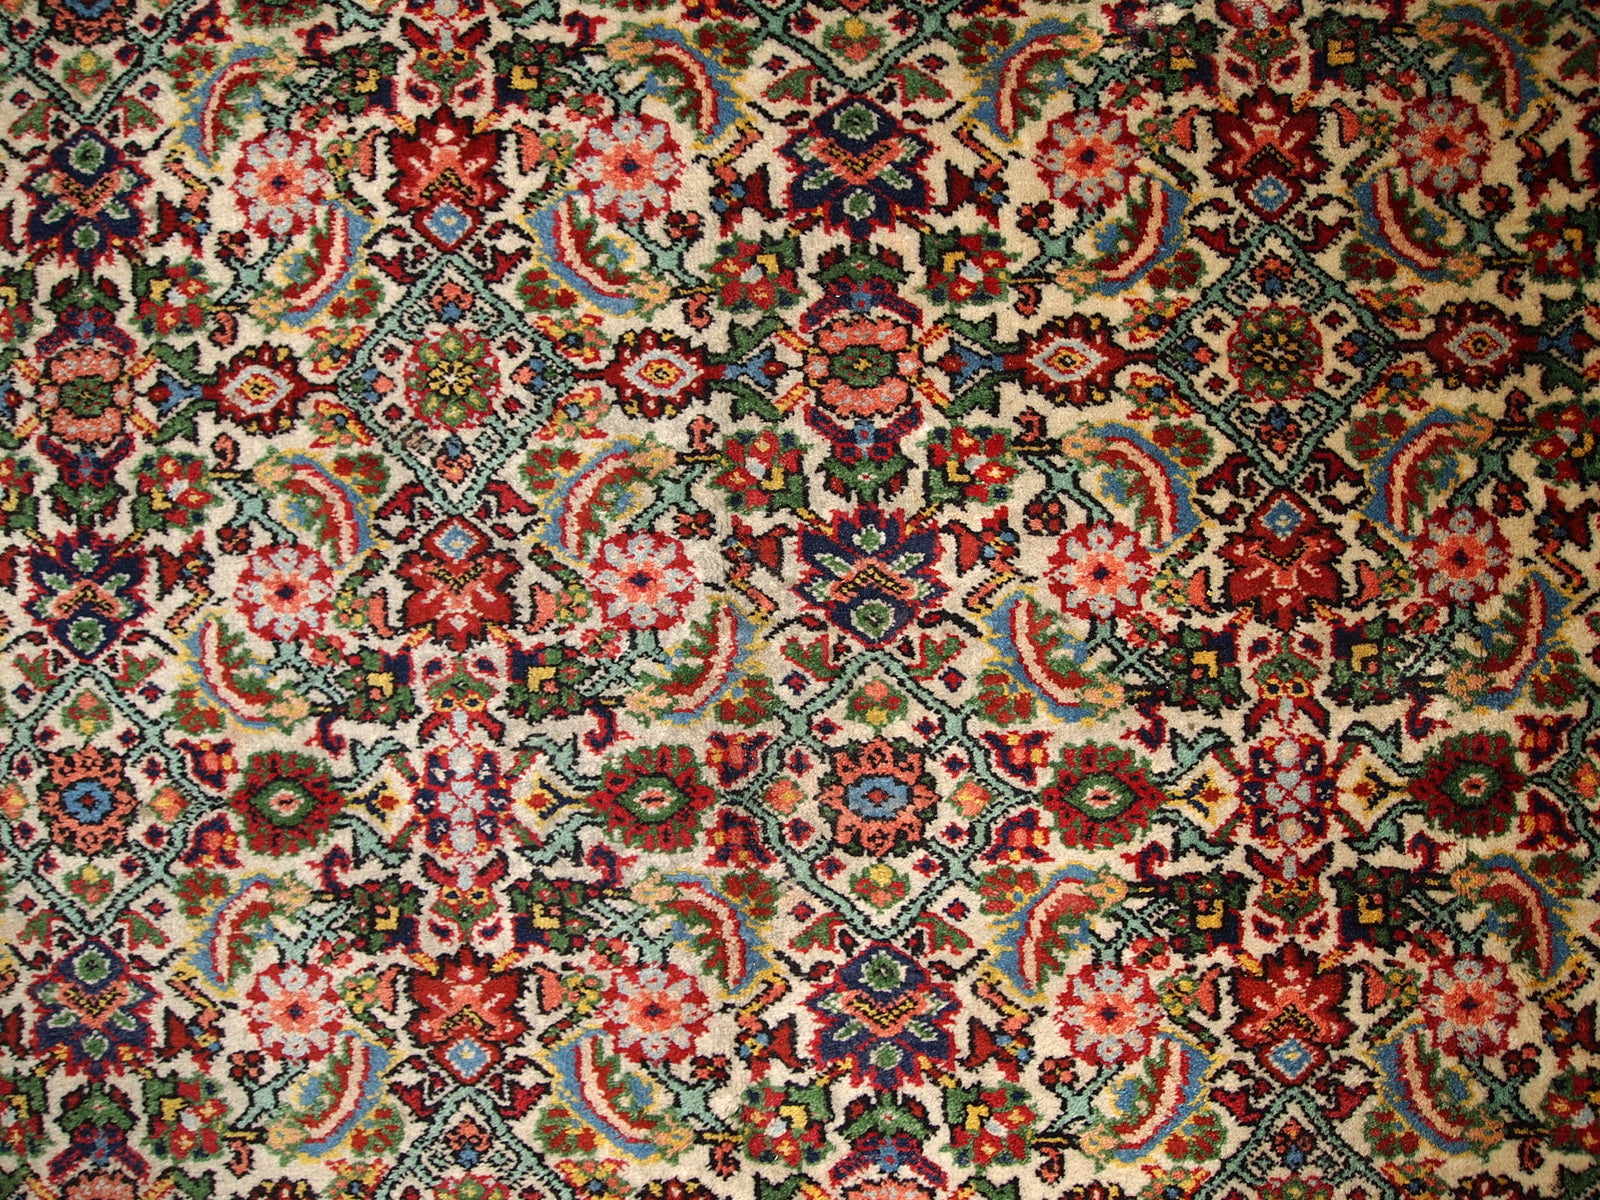 Handmade wool rug with Persian-inspired design